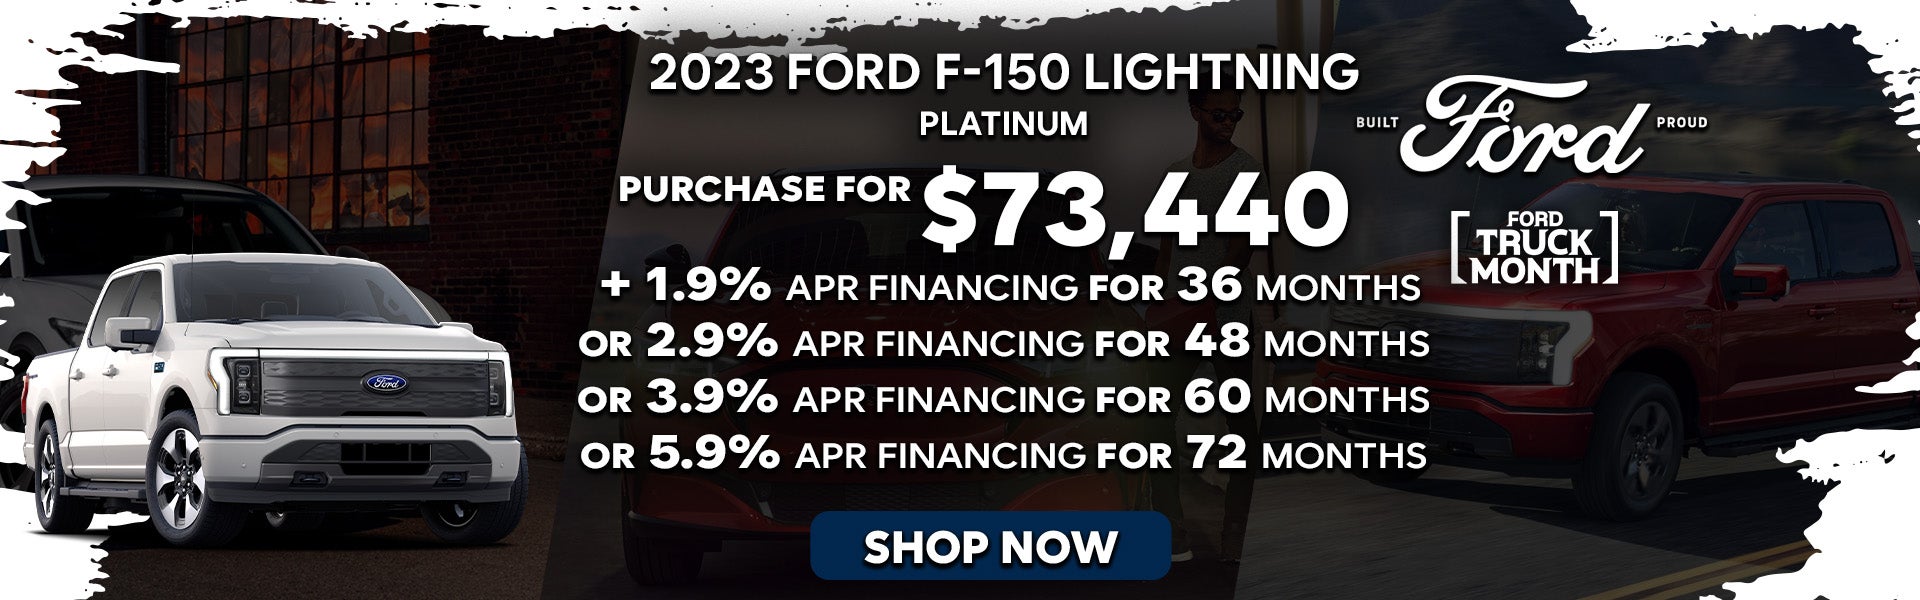 2023 Ford F-150 Lightning Platinum Special Offer